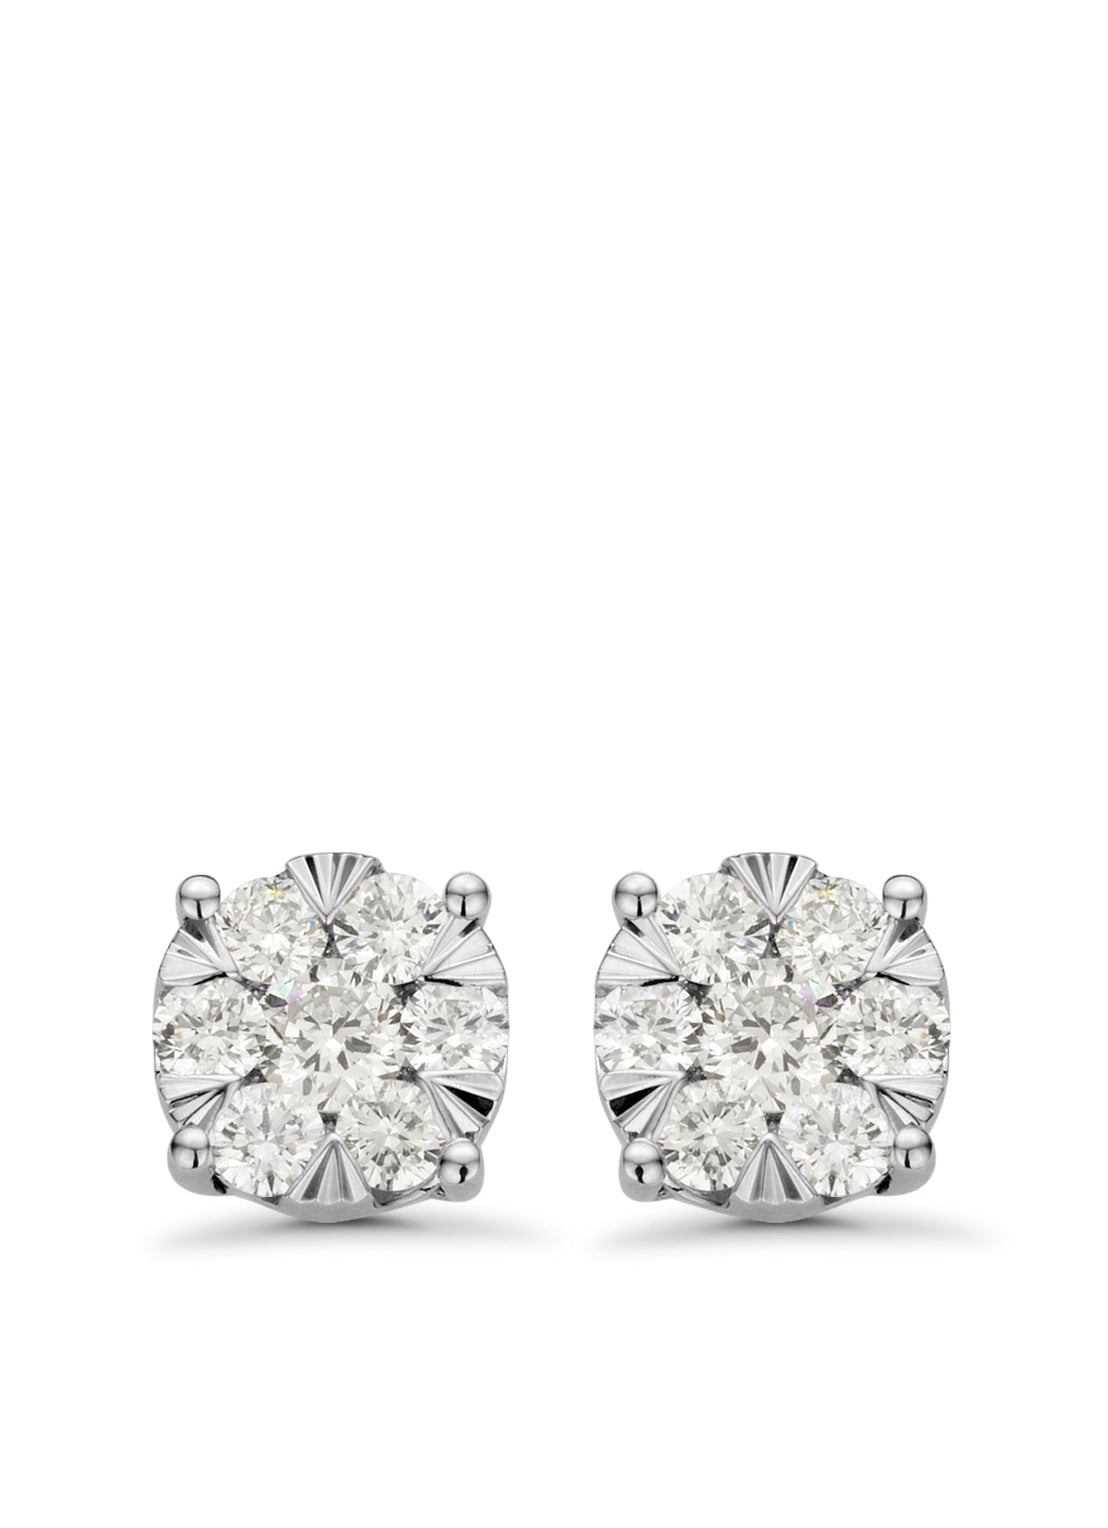 White gold earrings, 0.45 ct diamond, Enchanted